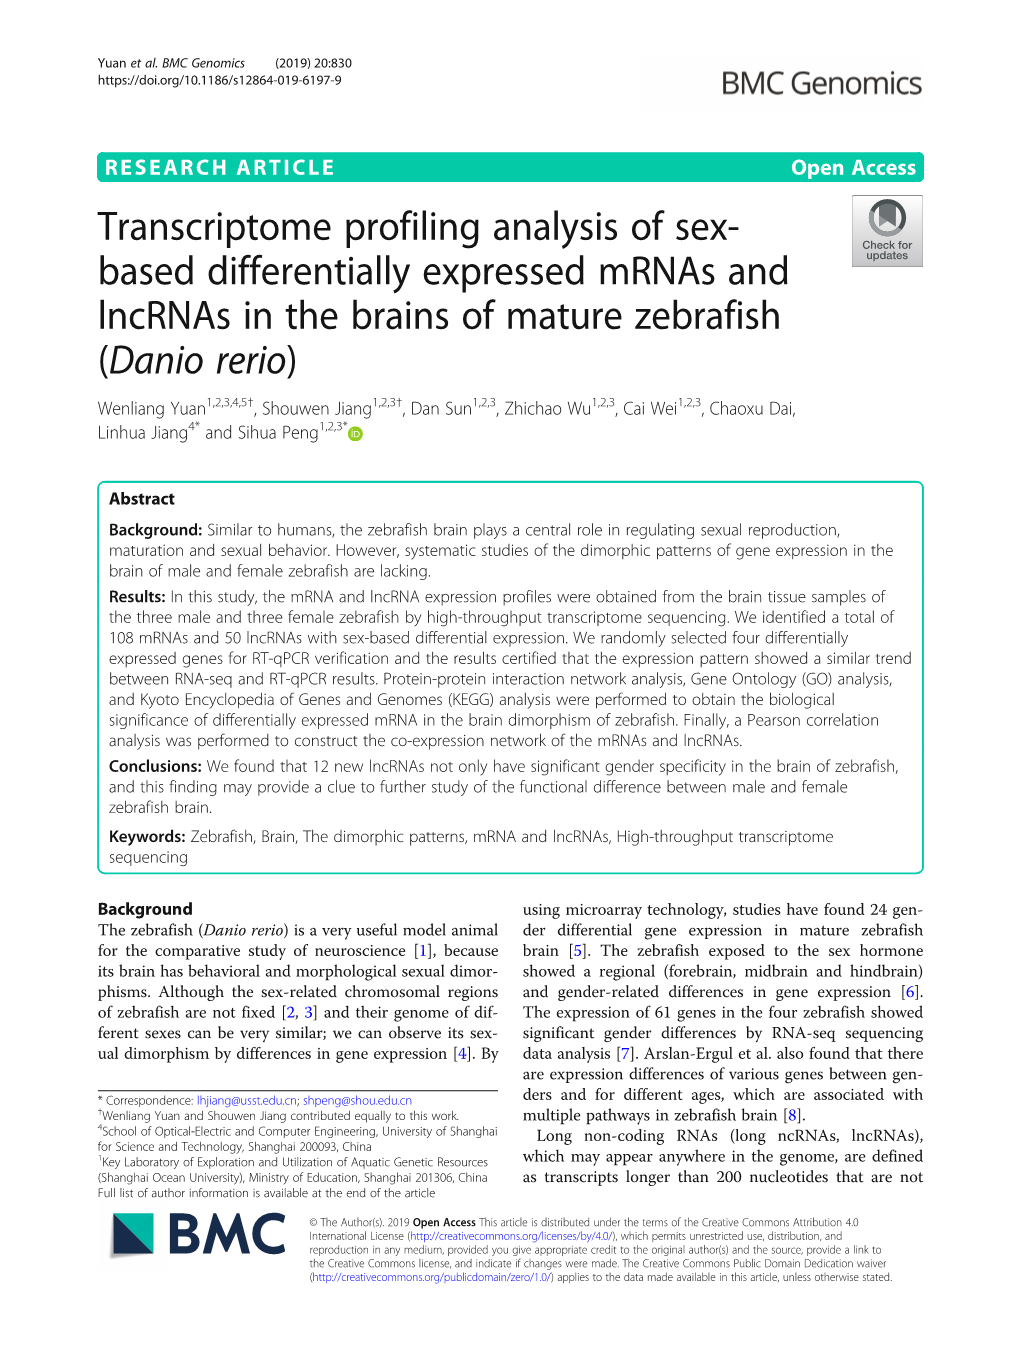 Transcriptome Profiling Analysis of Sex-Based